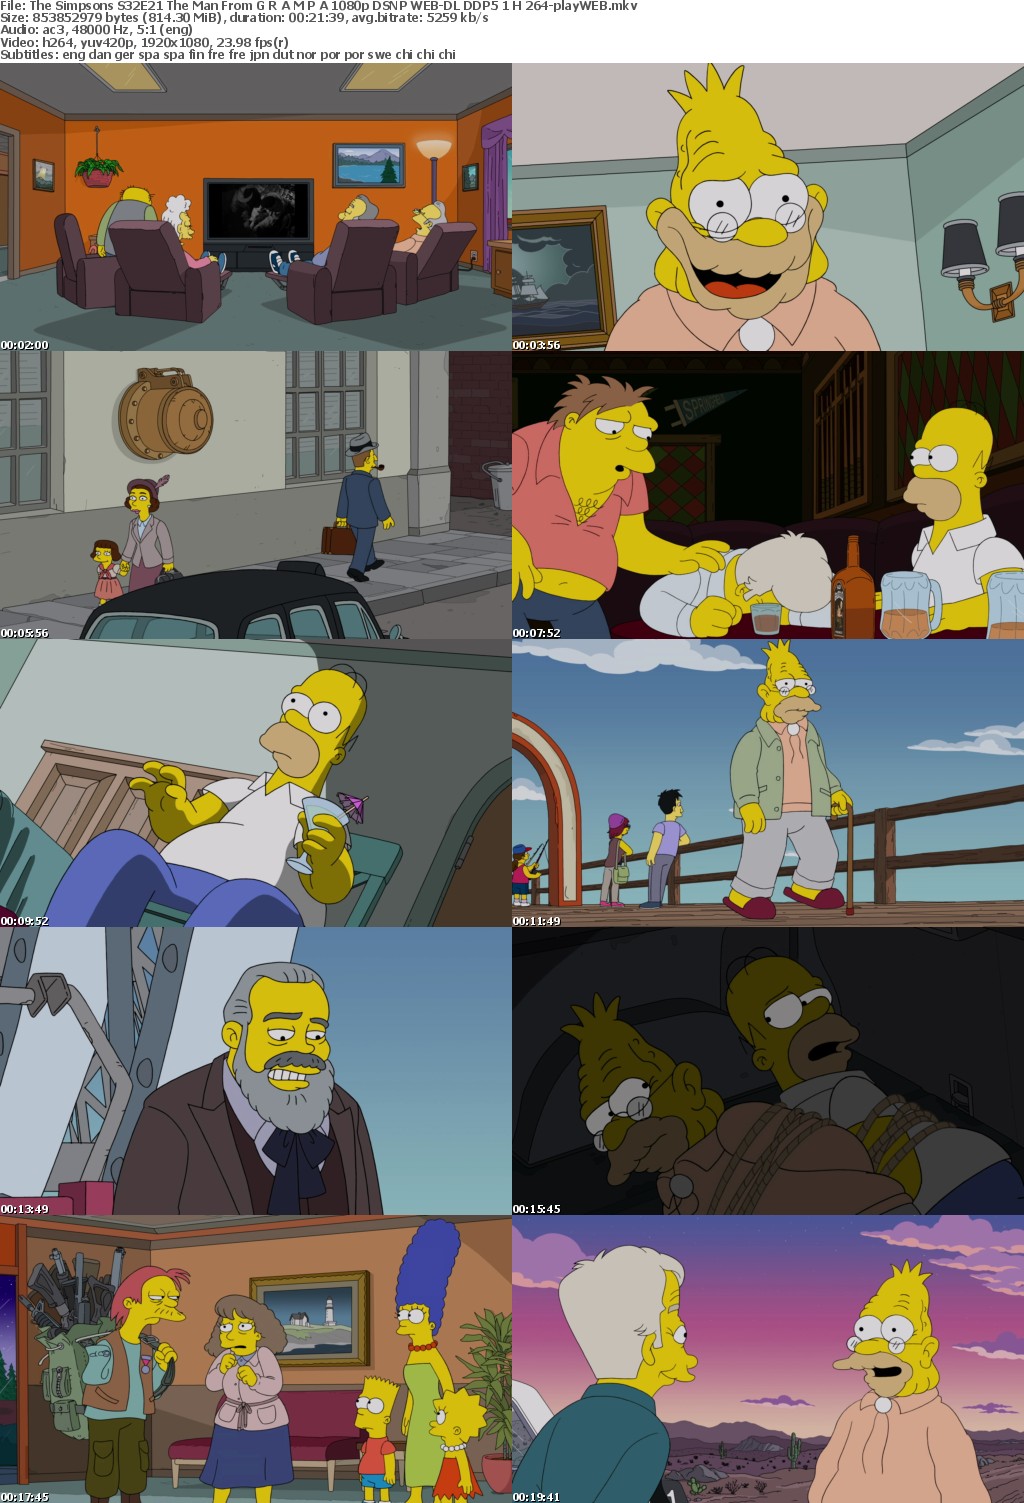 The Simpsons S32E21 The Man From G R A M P A 1080p DSNP WEB-DL DDP5 1 H 264-playWEB